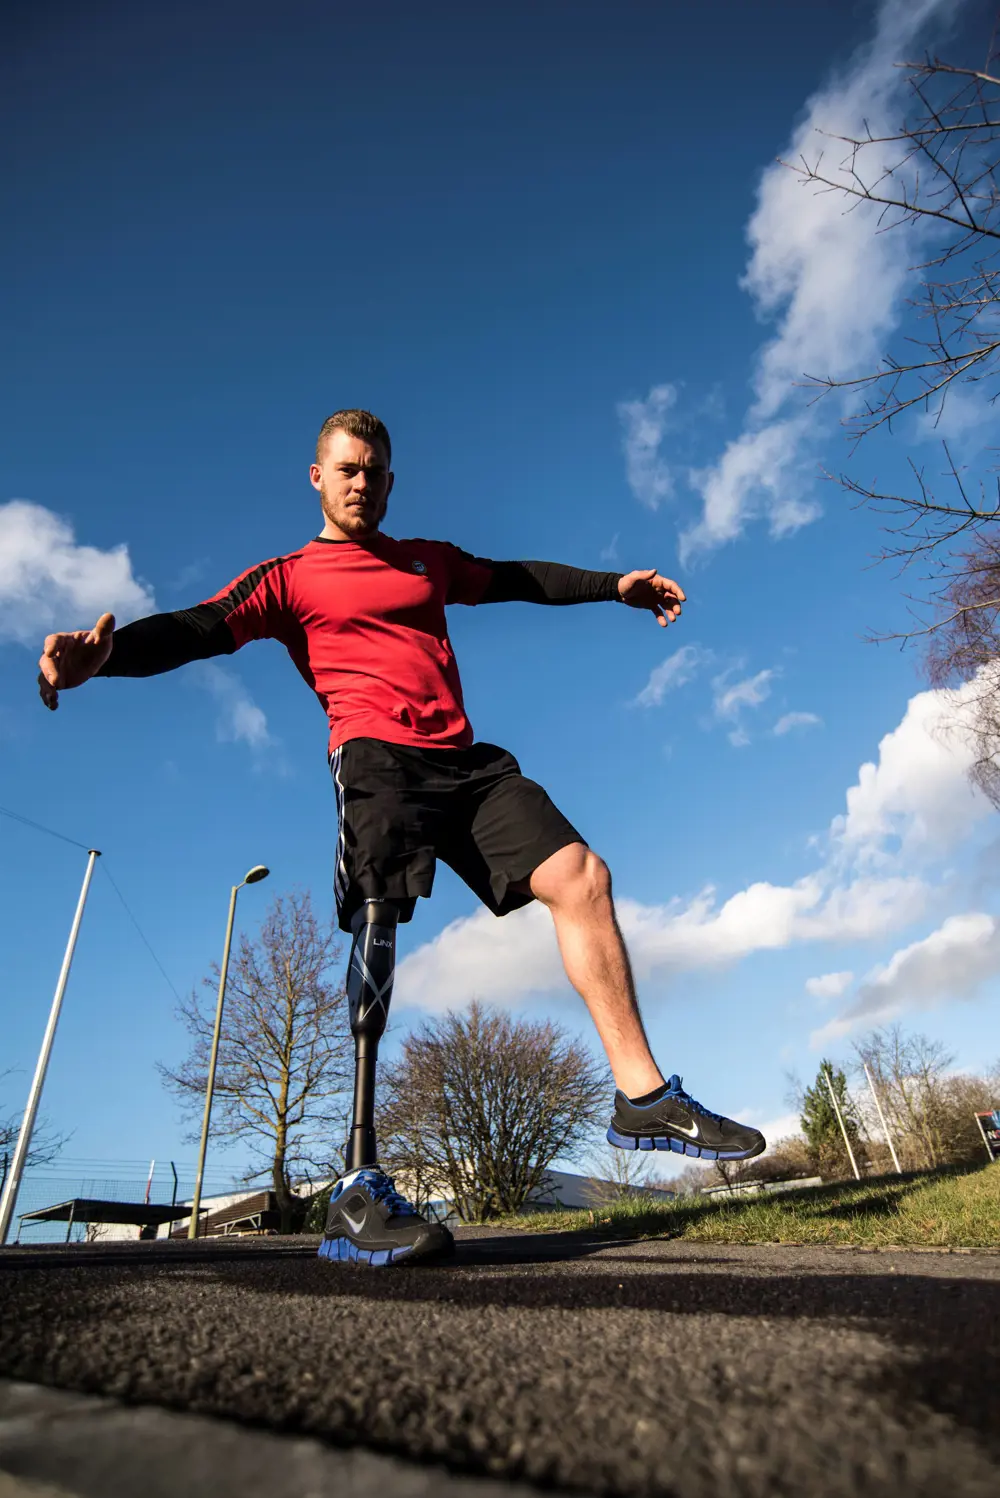 A man in sporting gear balancing on a Linx limb prosthetic leg.